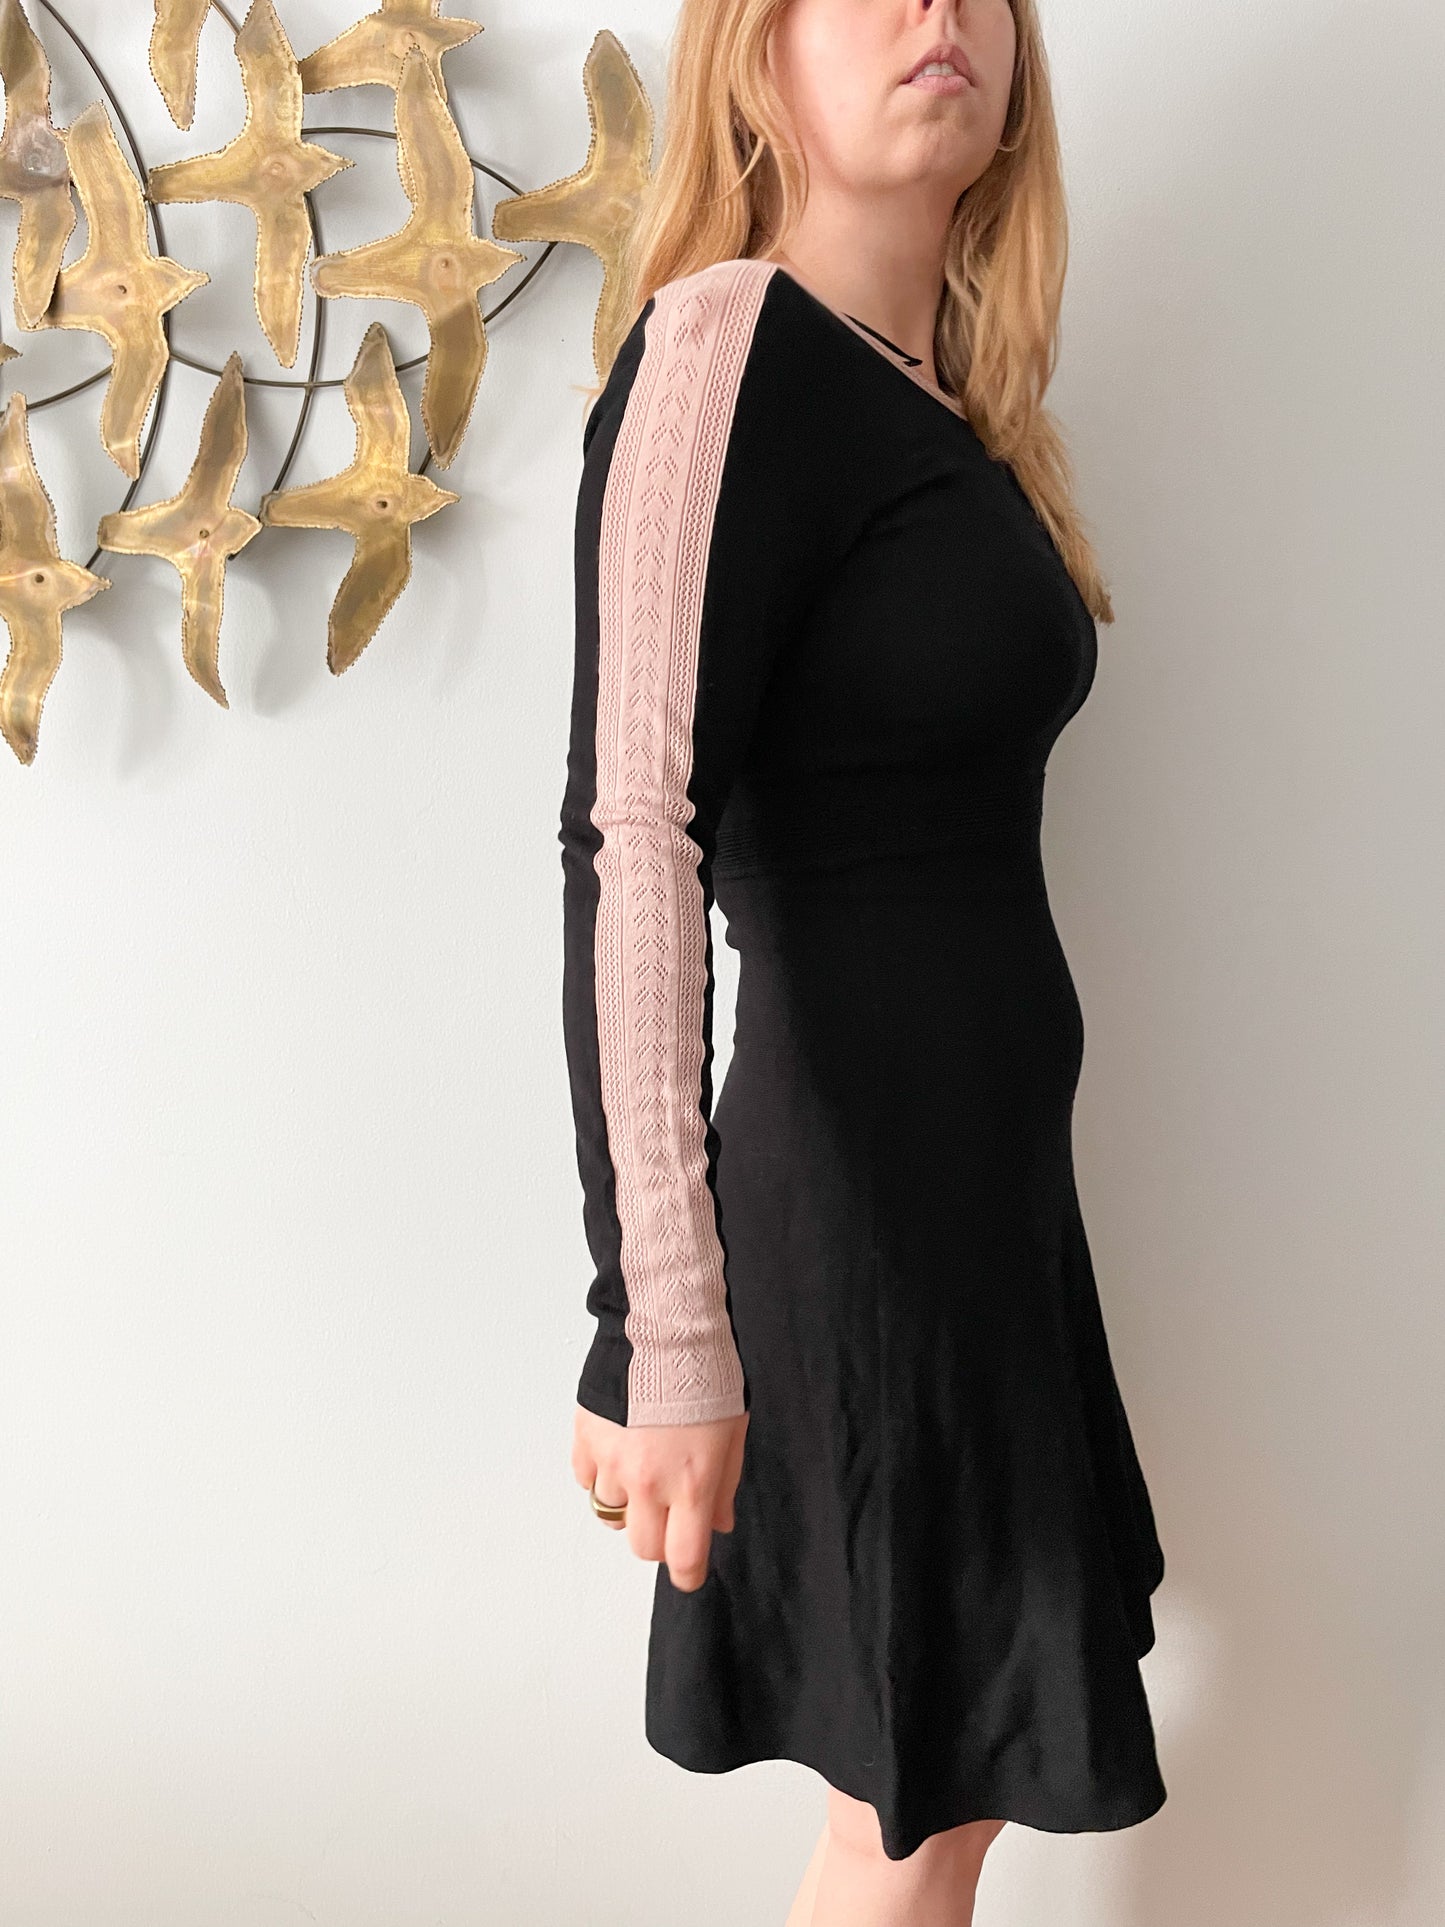 RW & Co. Black Light Pink Knit Sweater Dress - Small